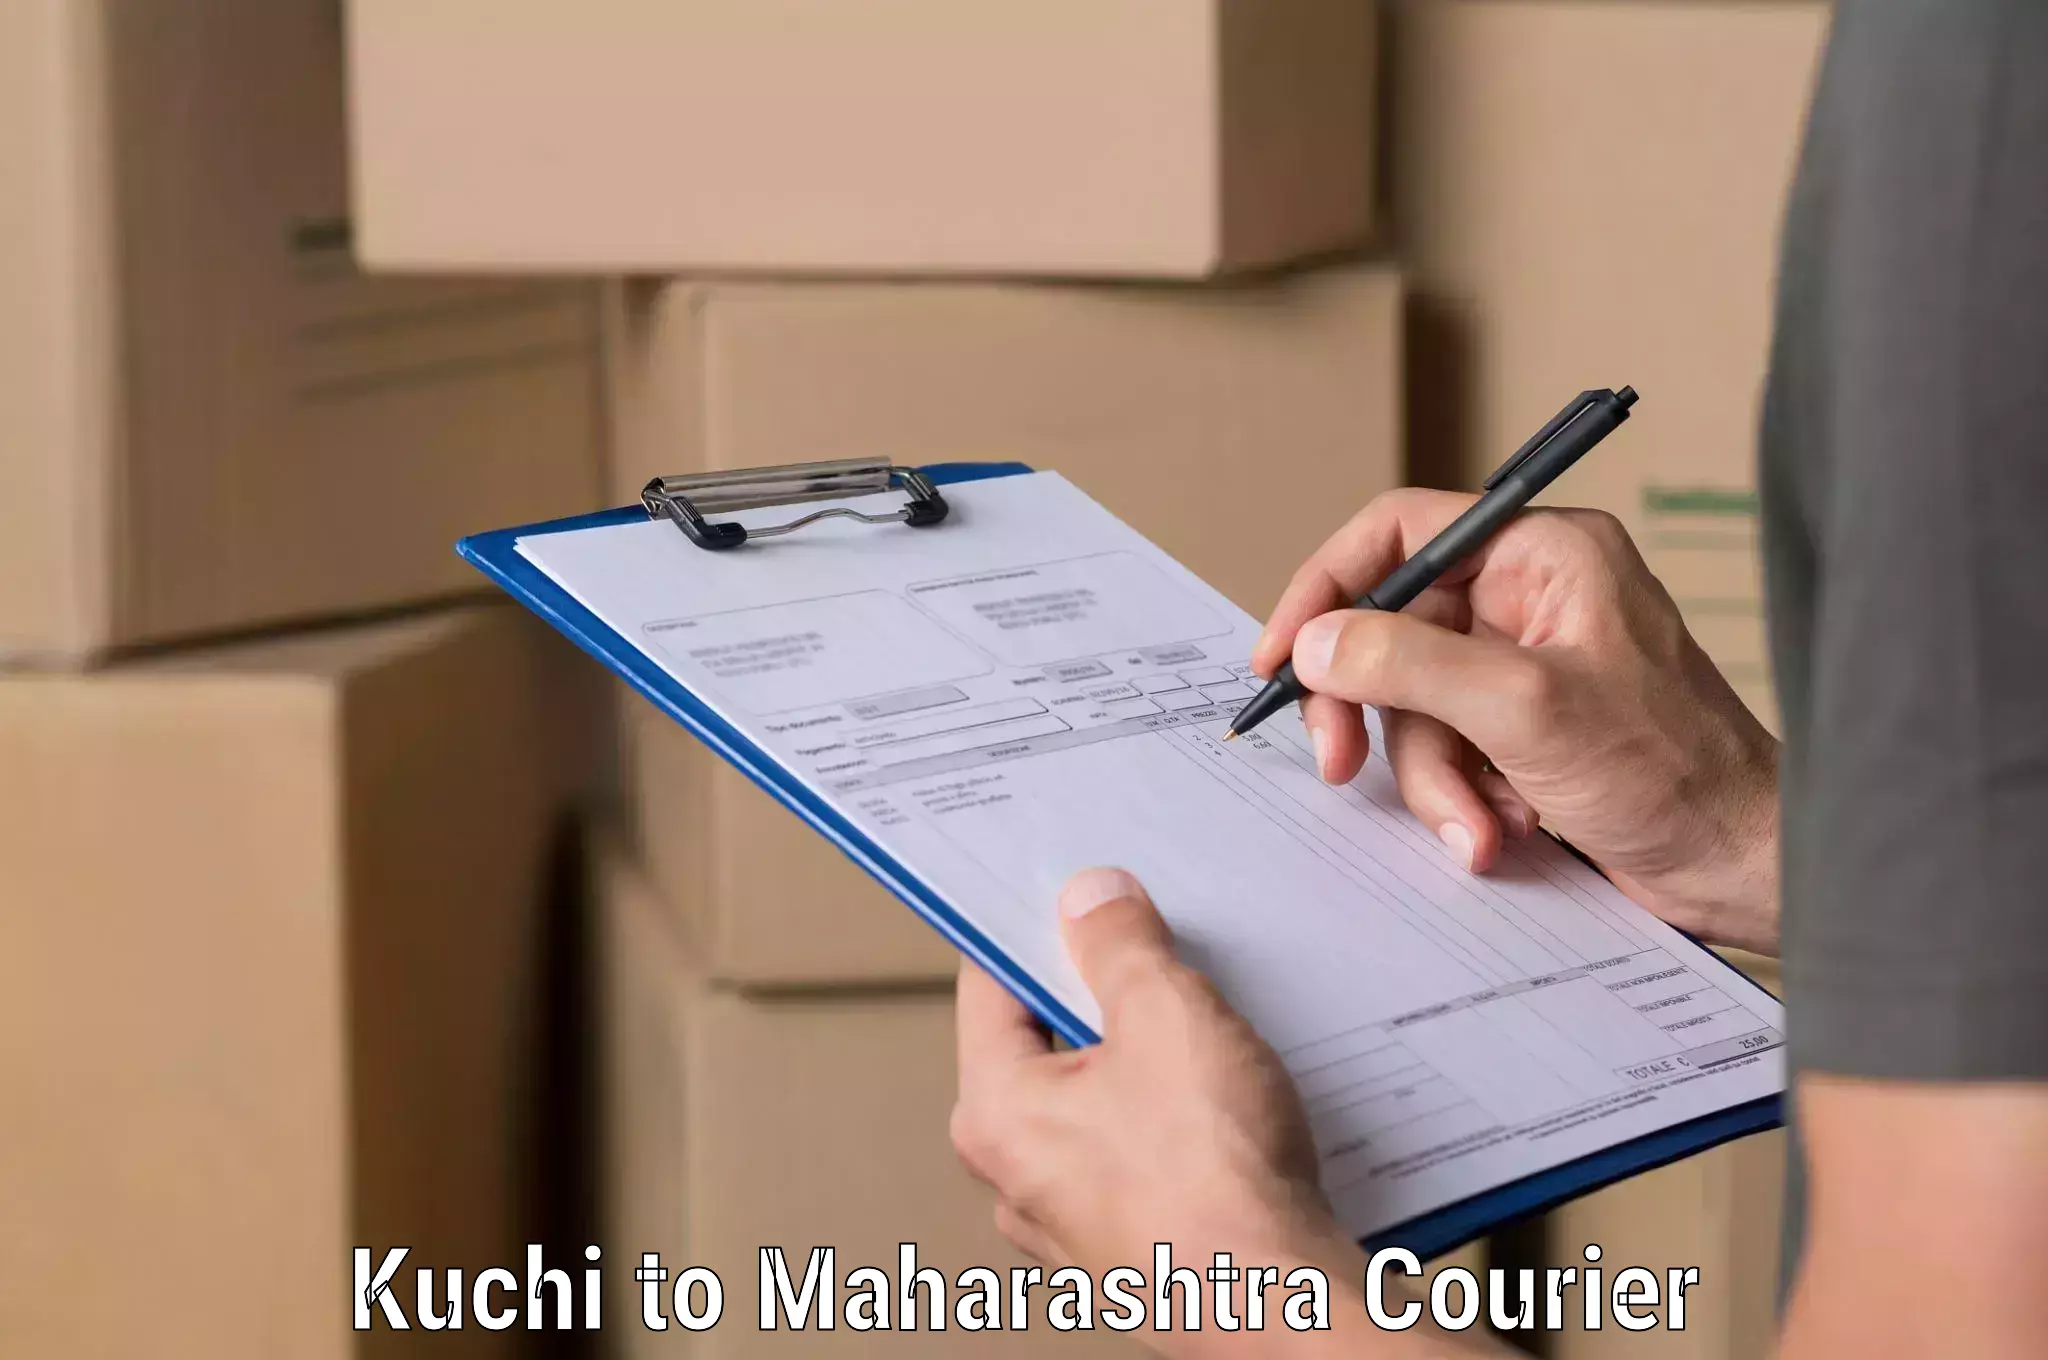 Supply chain delivery Kuchi to Maharashtra